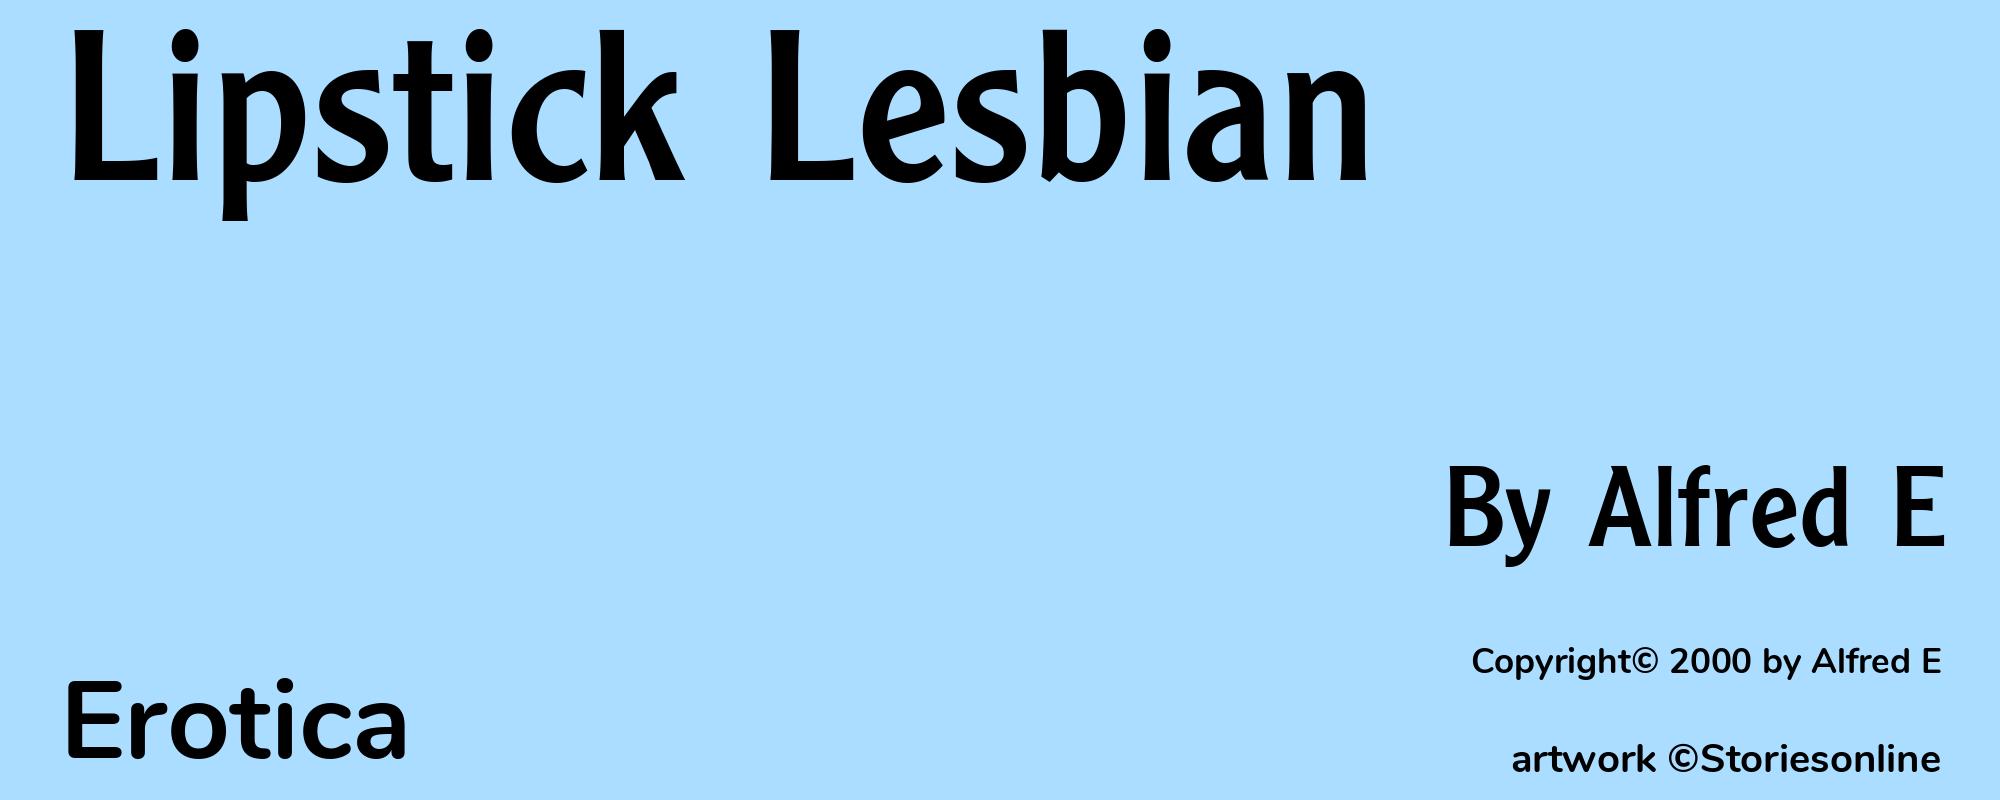 Lipstick Lesbian - Cover